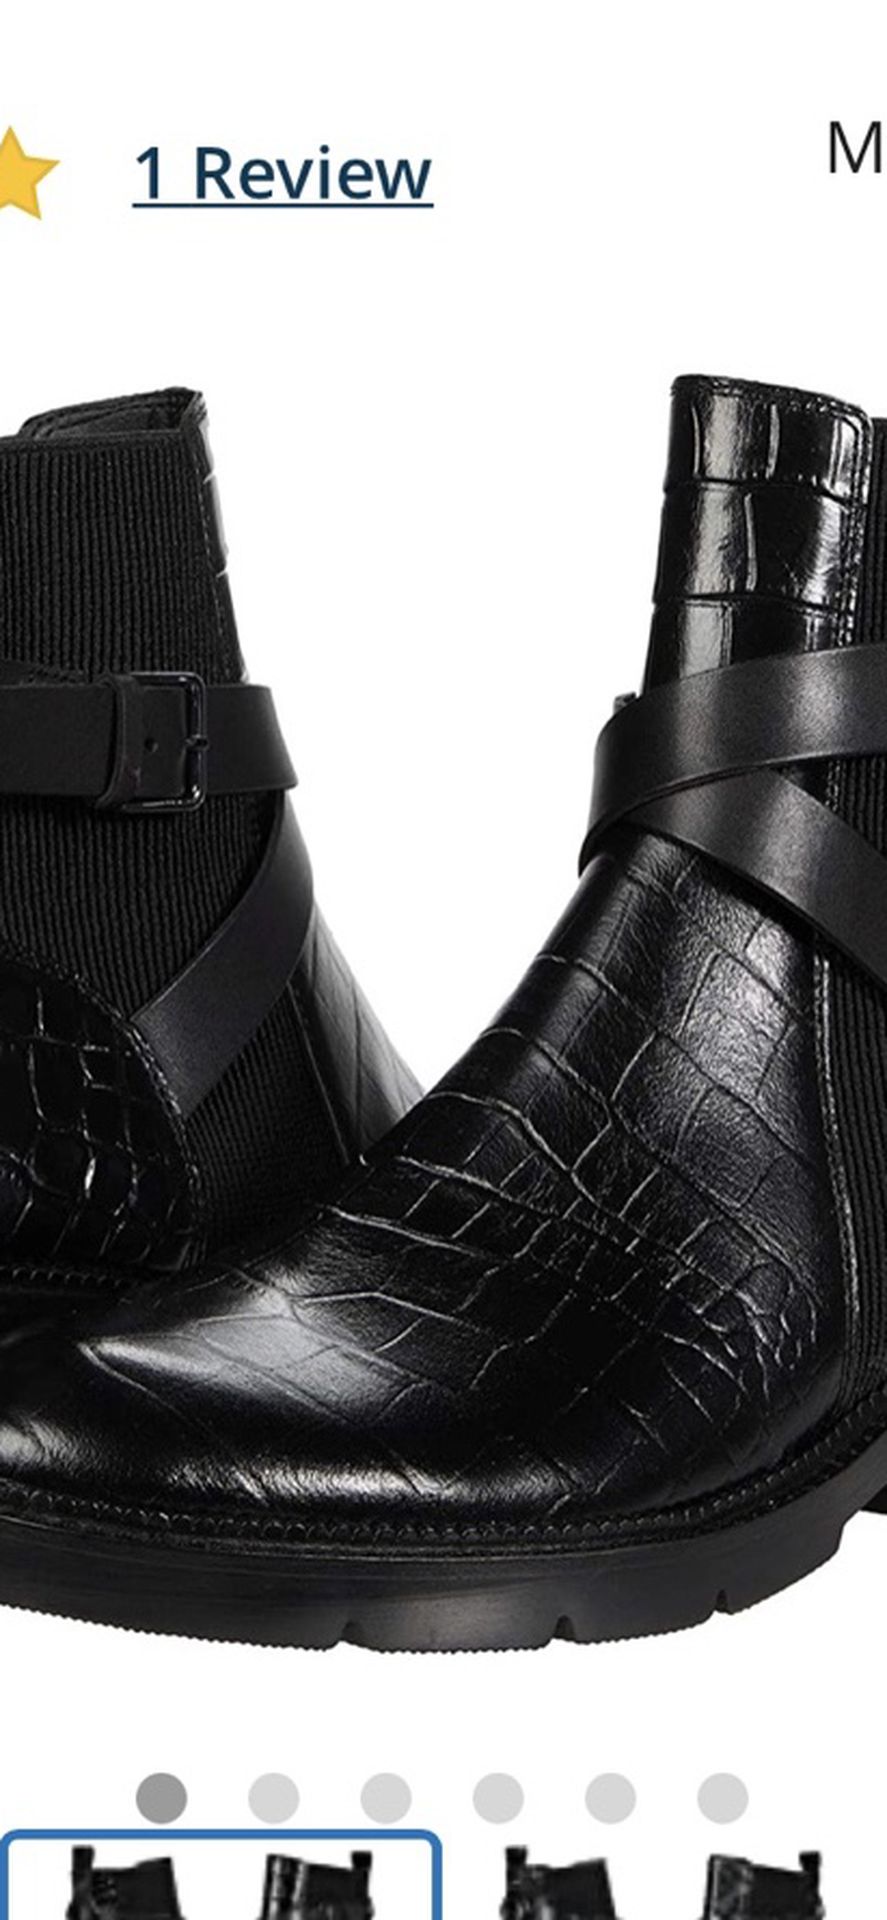 Donald Plainer Black Boot Size 7 M Brand New